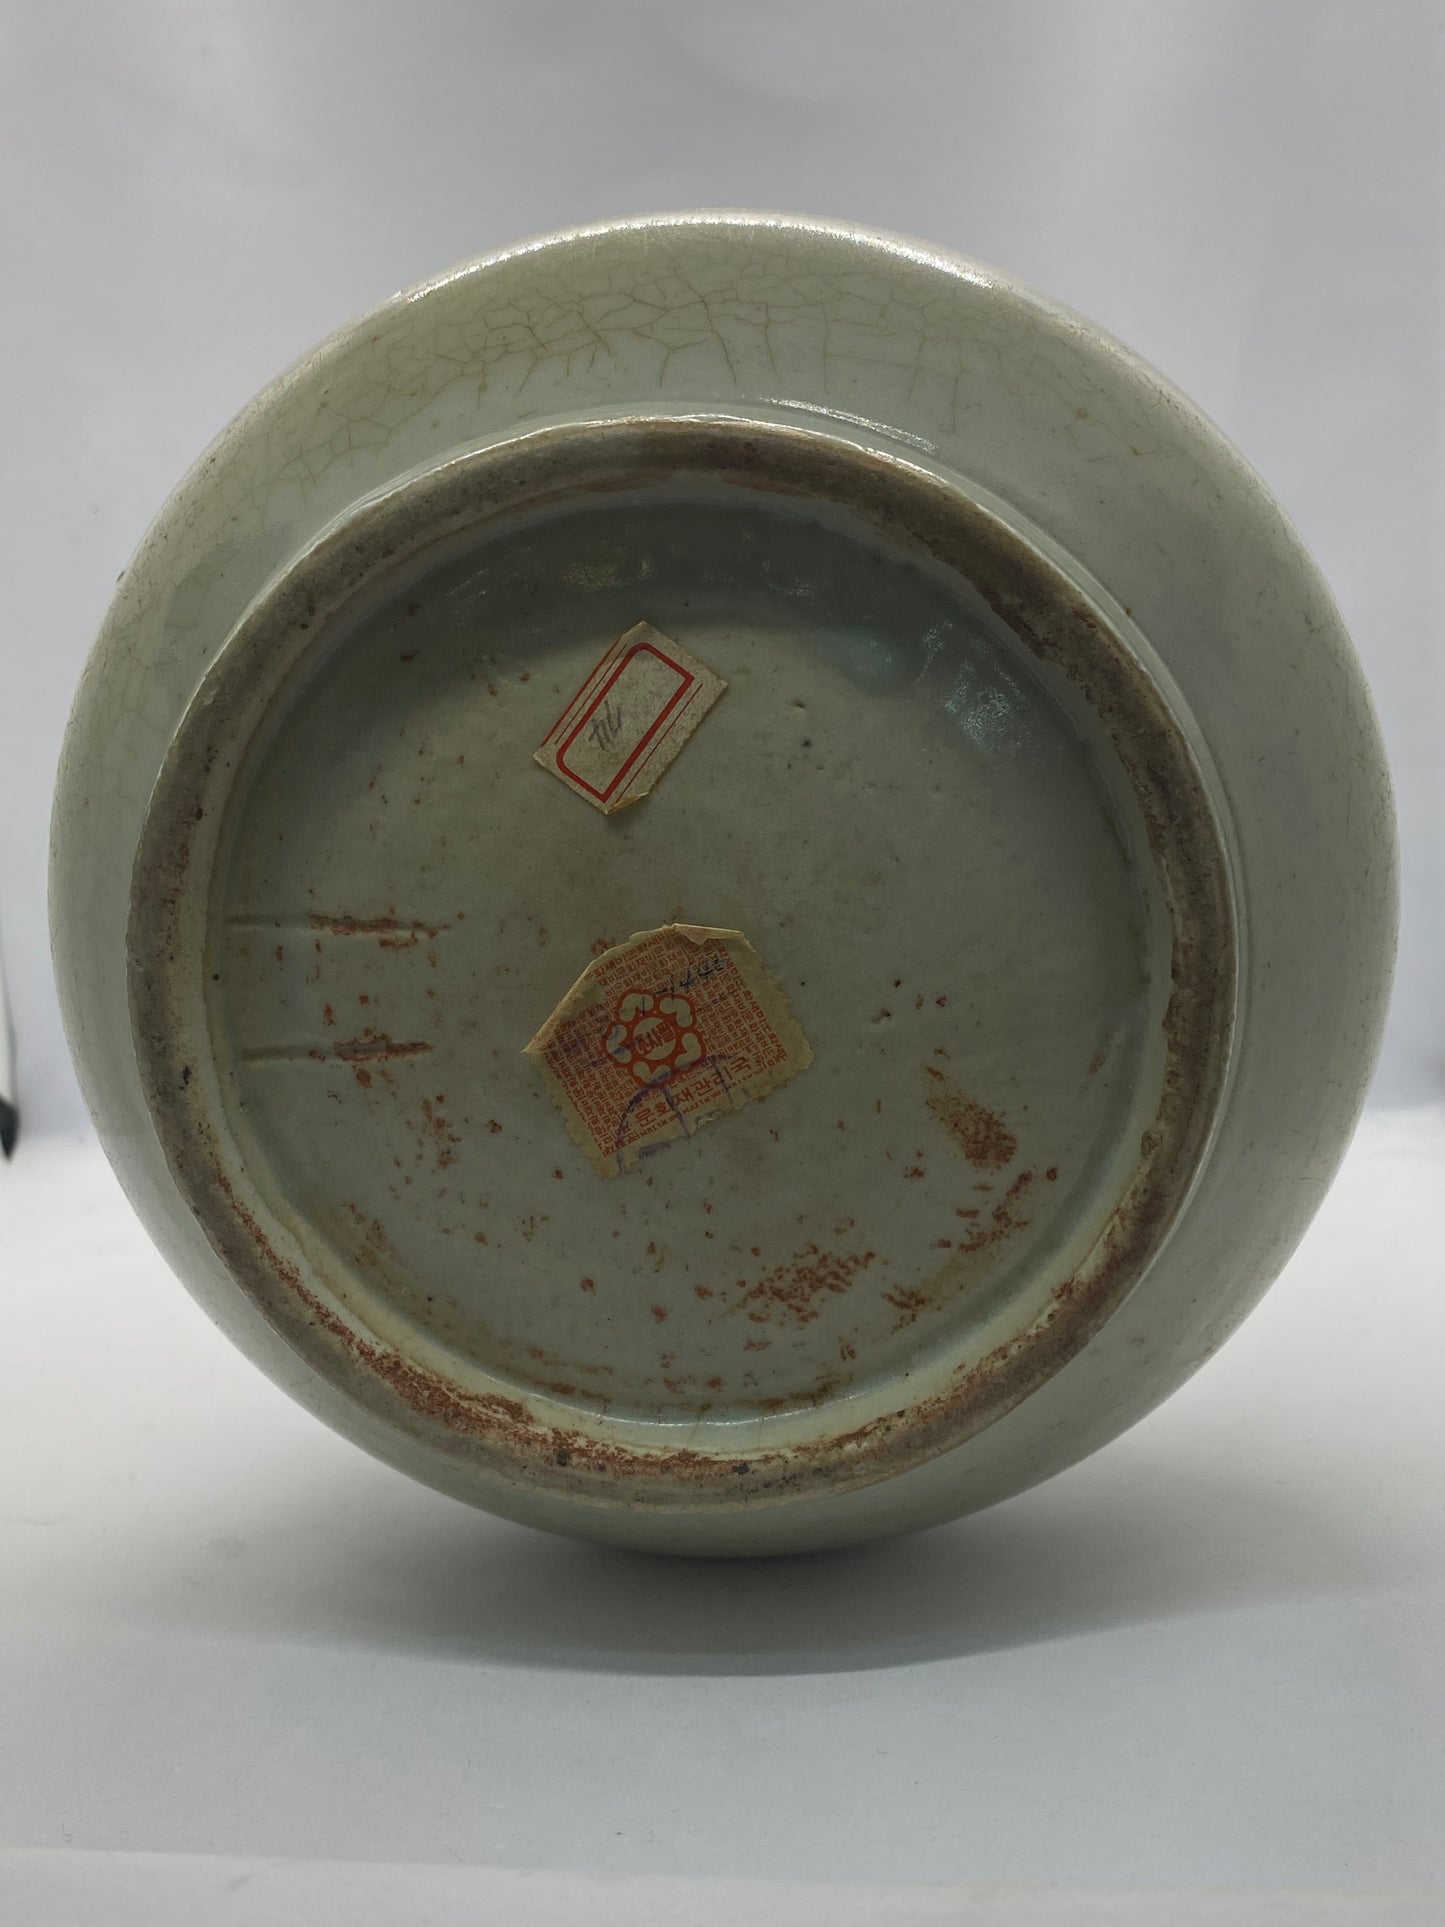 Late Joseon Period Bottle Form Vase (19th c.), White Porcelain with Cobalt Glaze